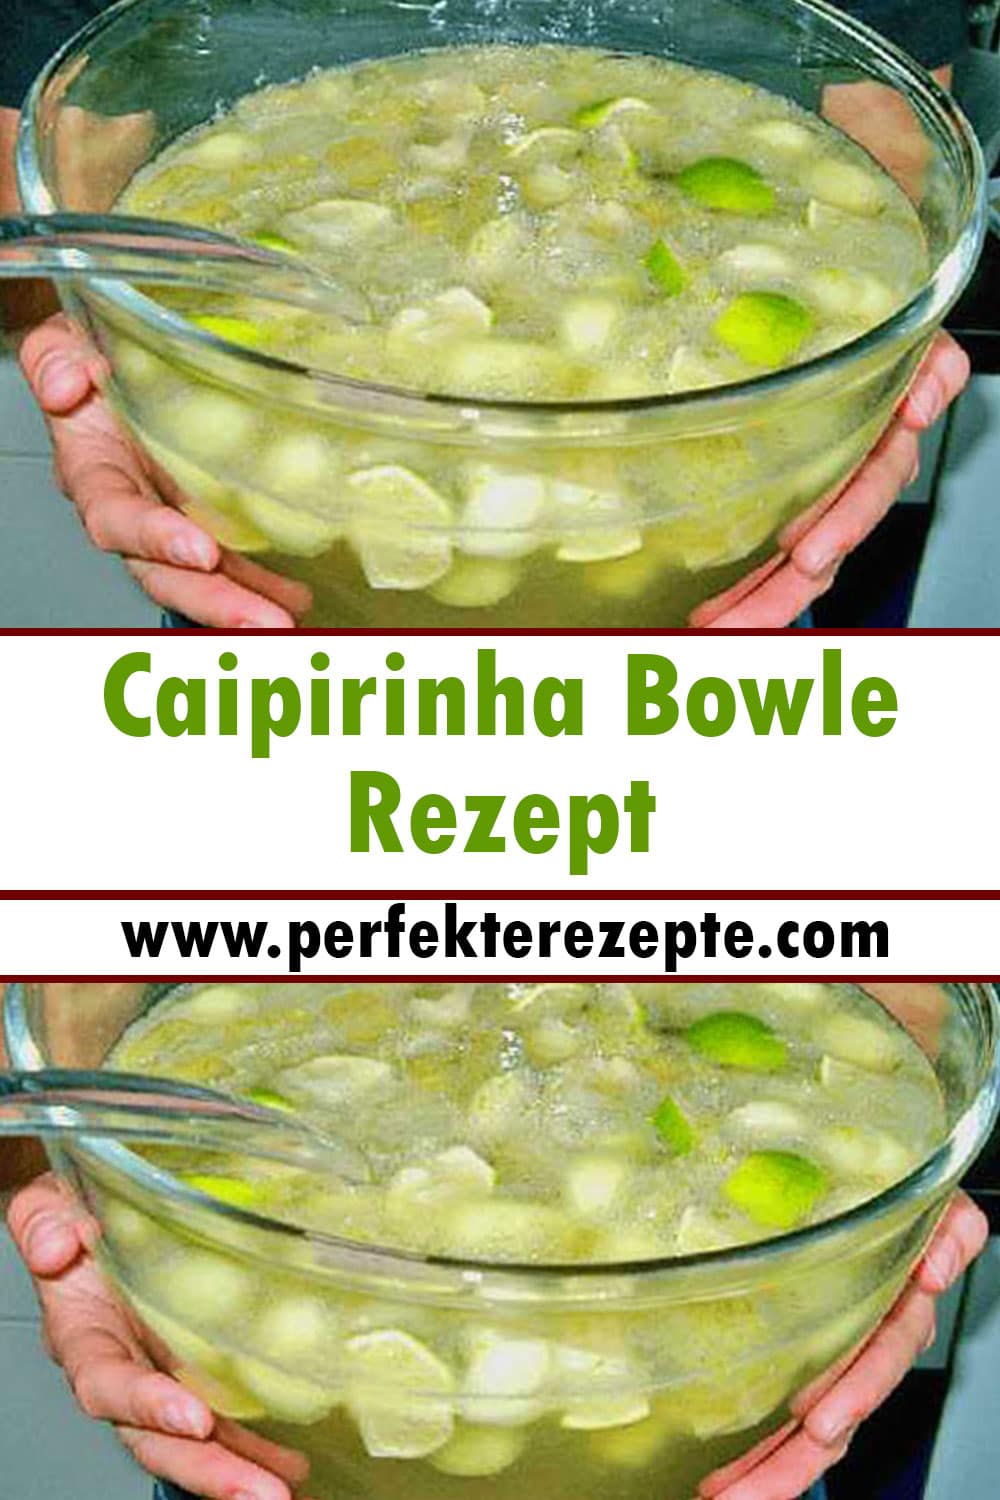 Caipirinha Bowle Rezept, das Zeug macht wirklich süchtig